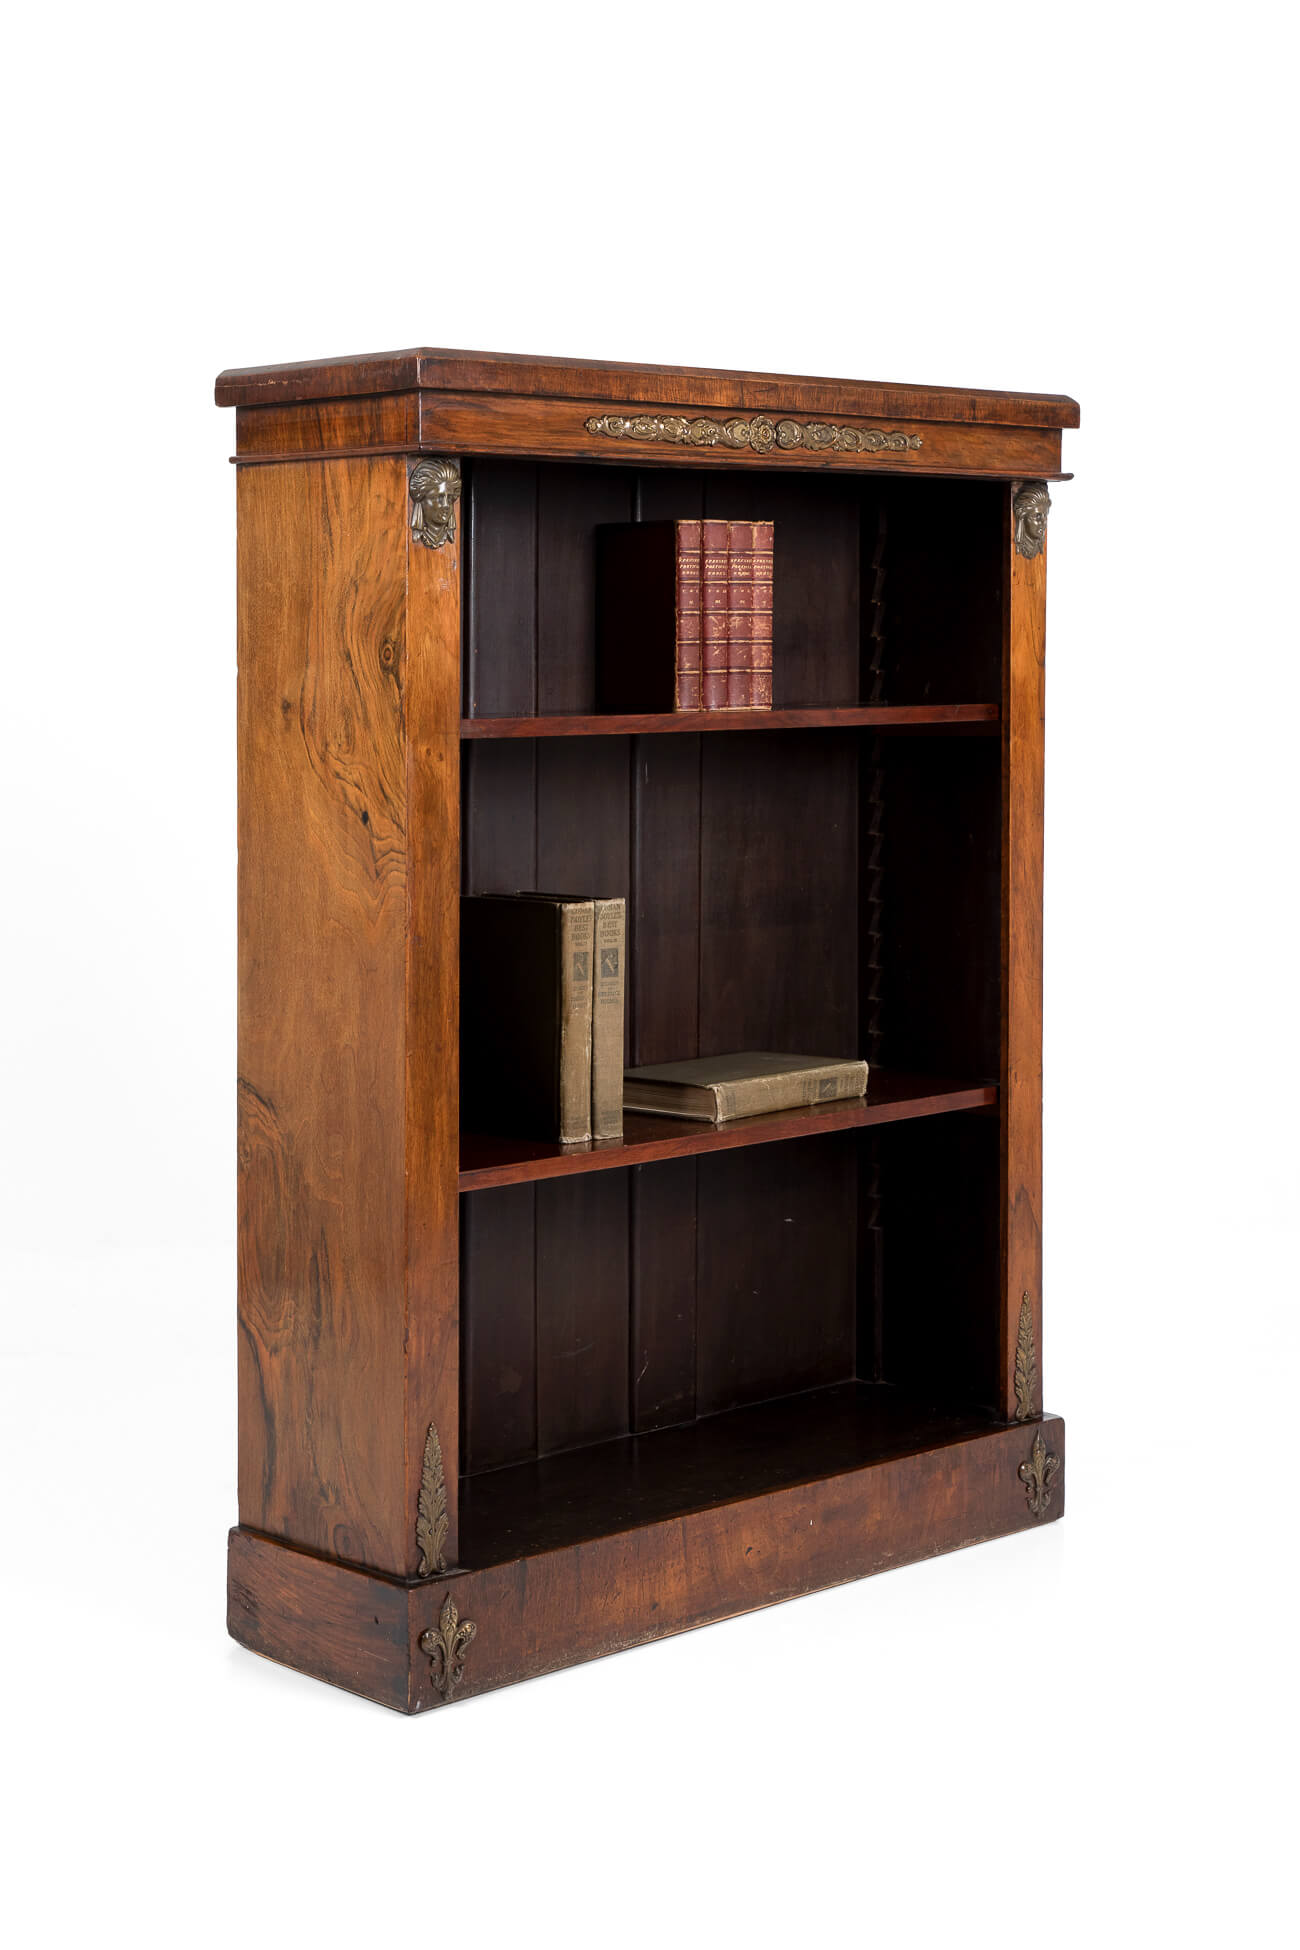 Antique Regency rosewood open bookcase